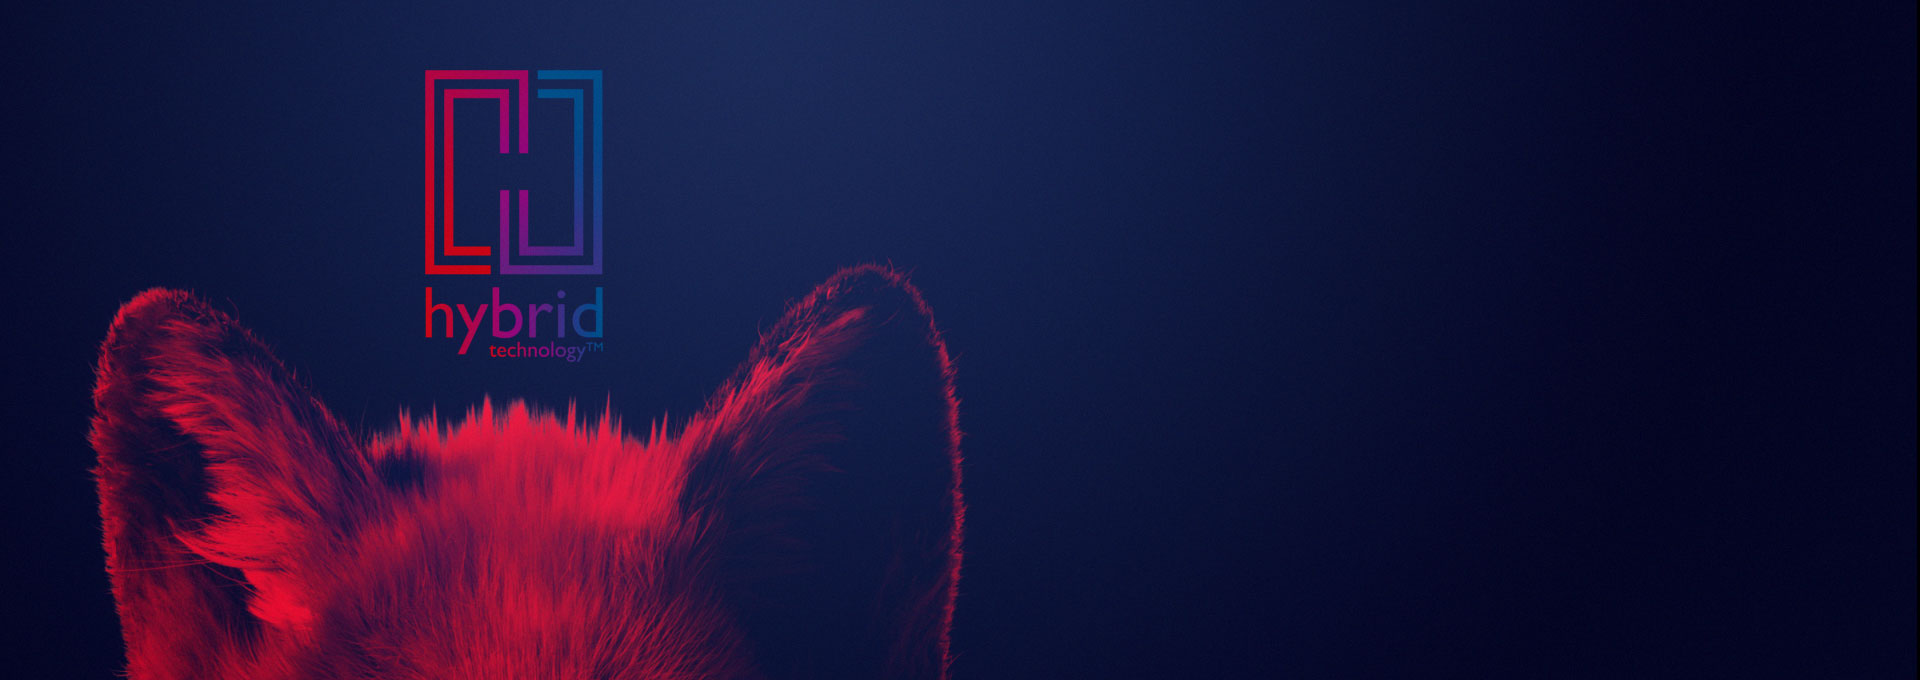 Red drawing of fox ears on dark blue background and Hybrid Technology logo of Bernafon Alpha XT hearing aids